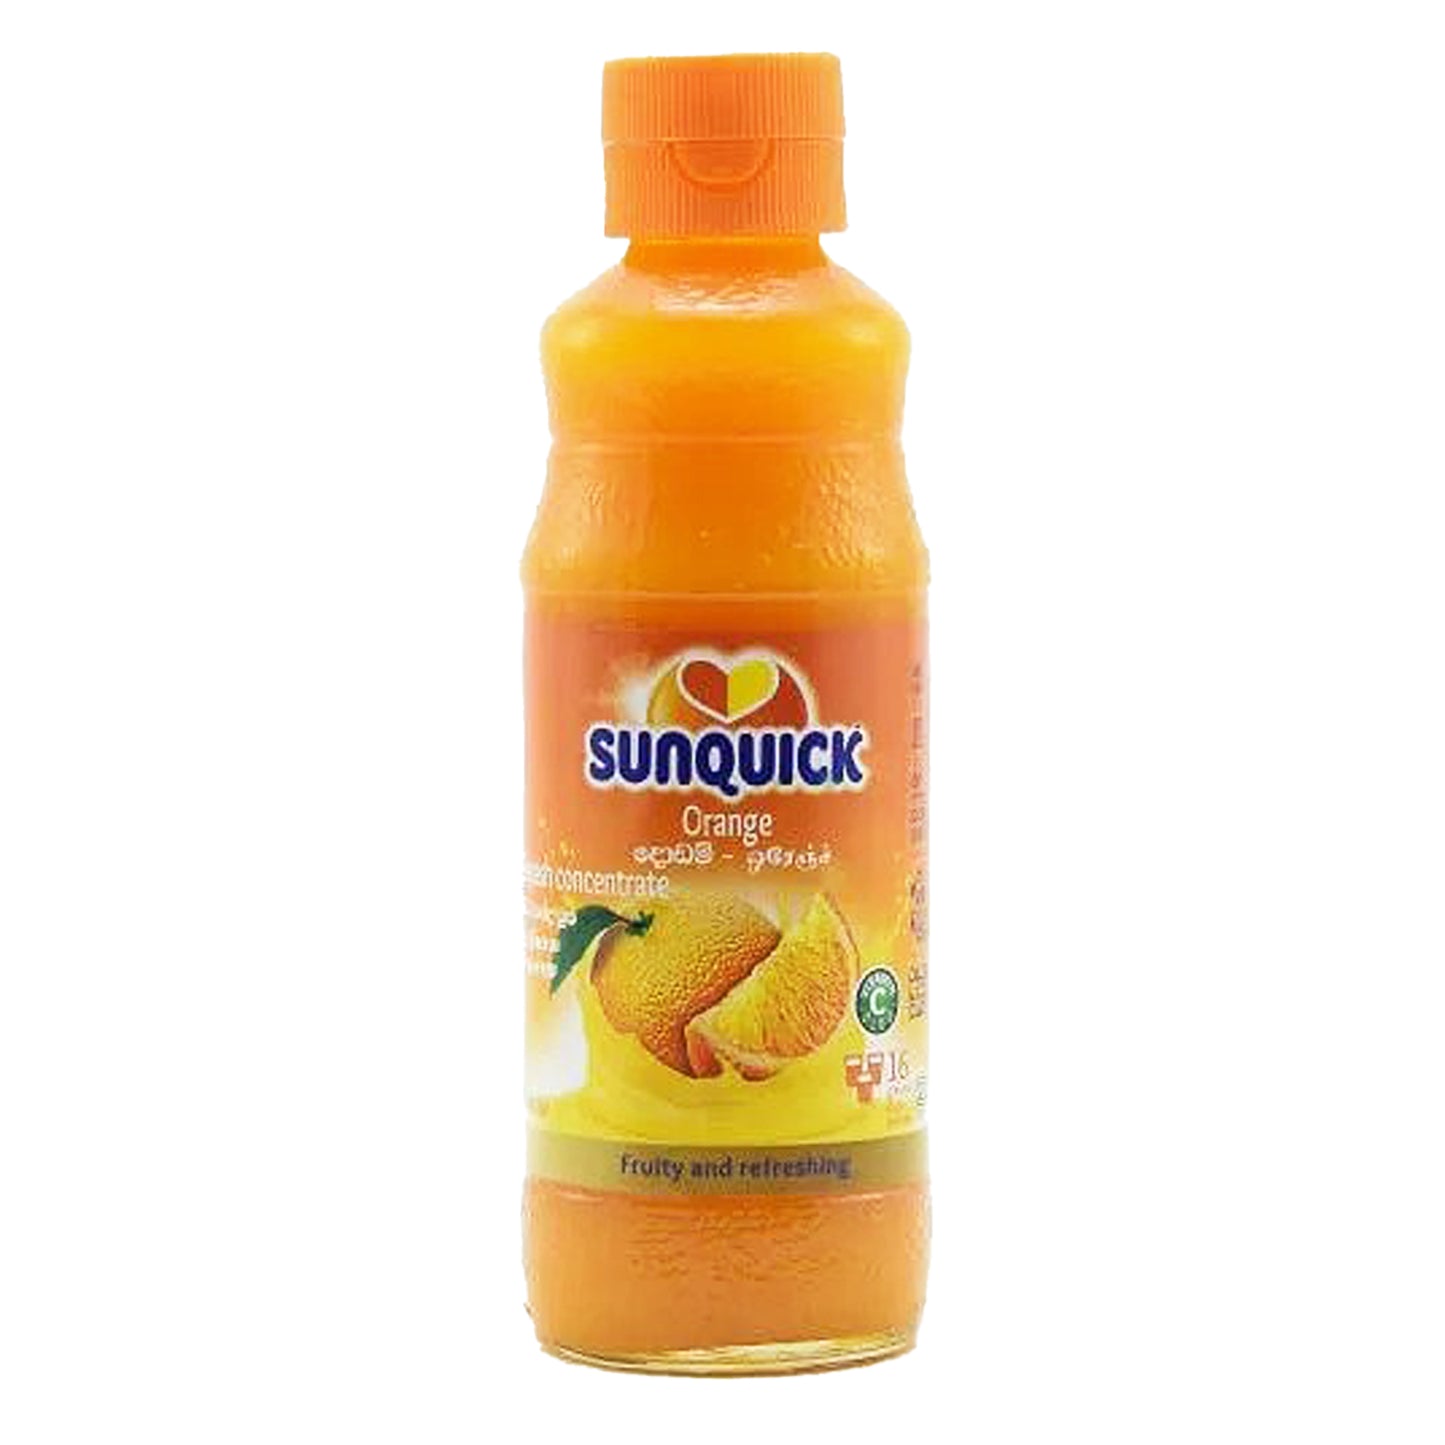 Sunquick Orange (330ml)